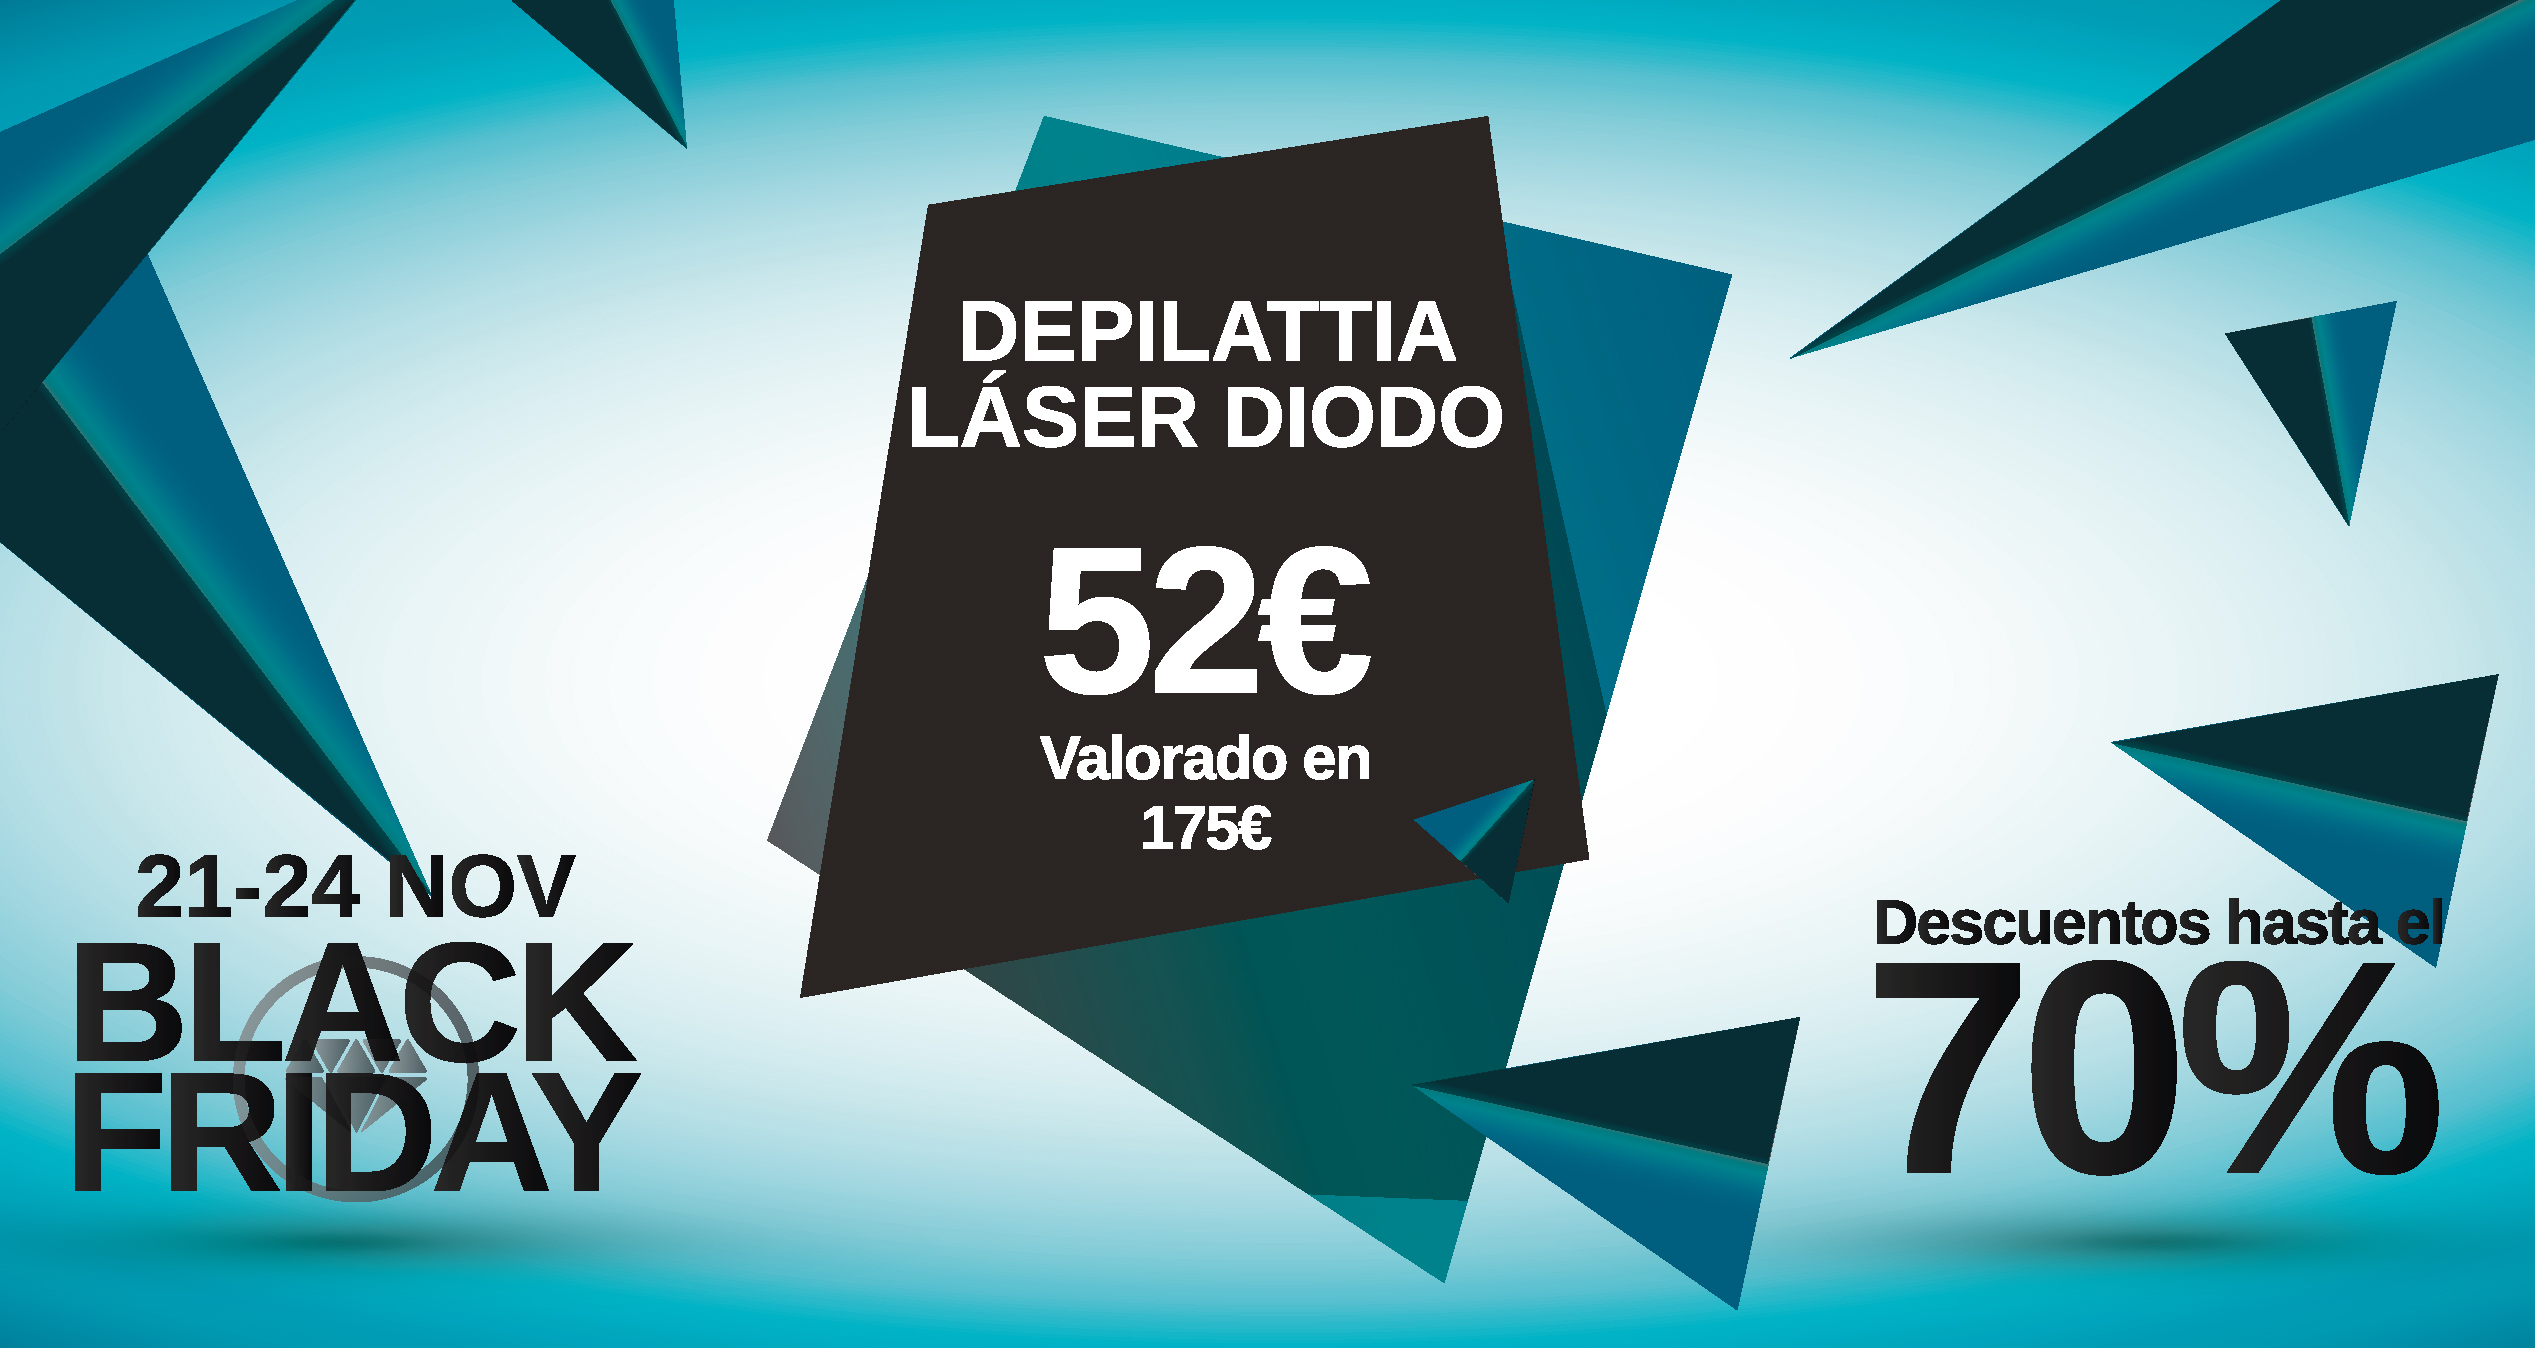 AAFF-Black-friday-depilattia-spa_laser-diodo-FACEBOOK